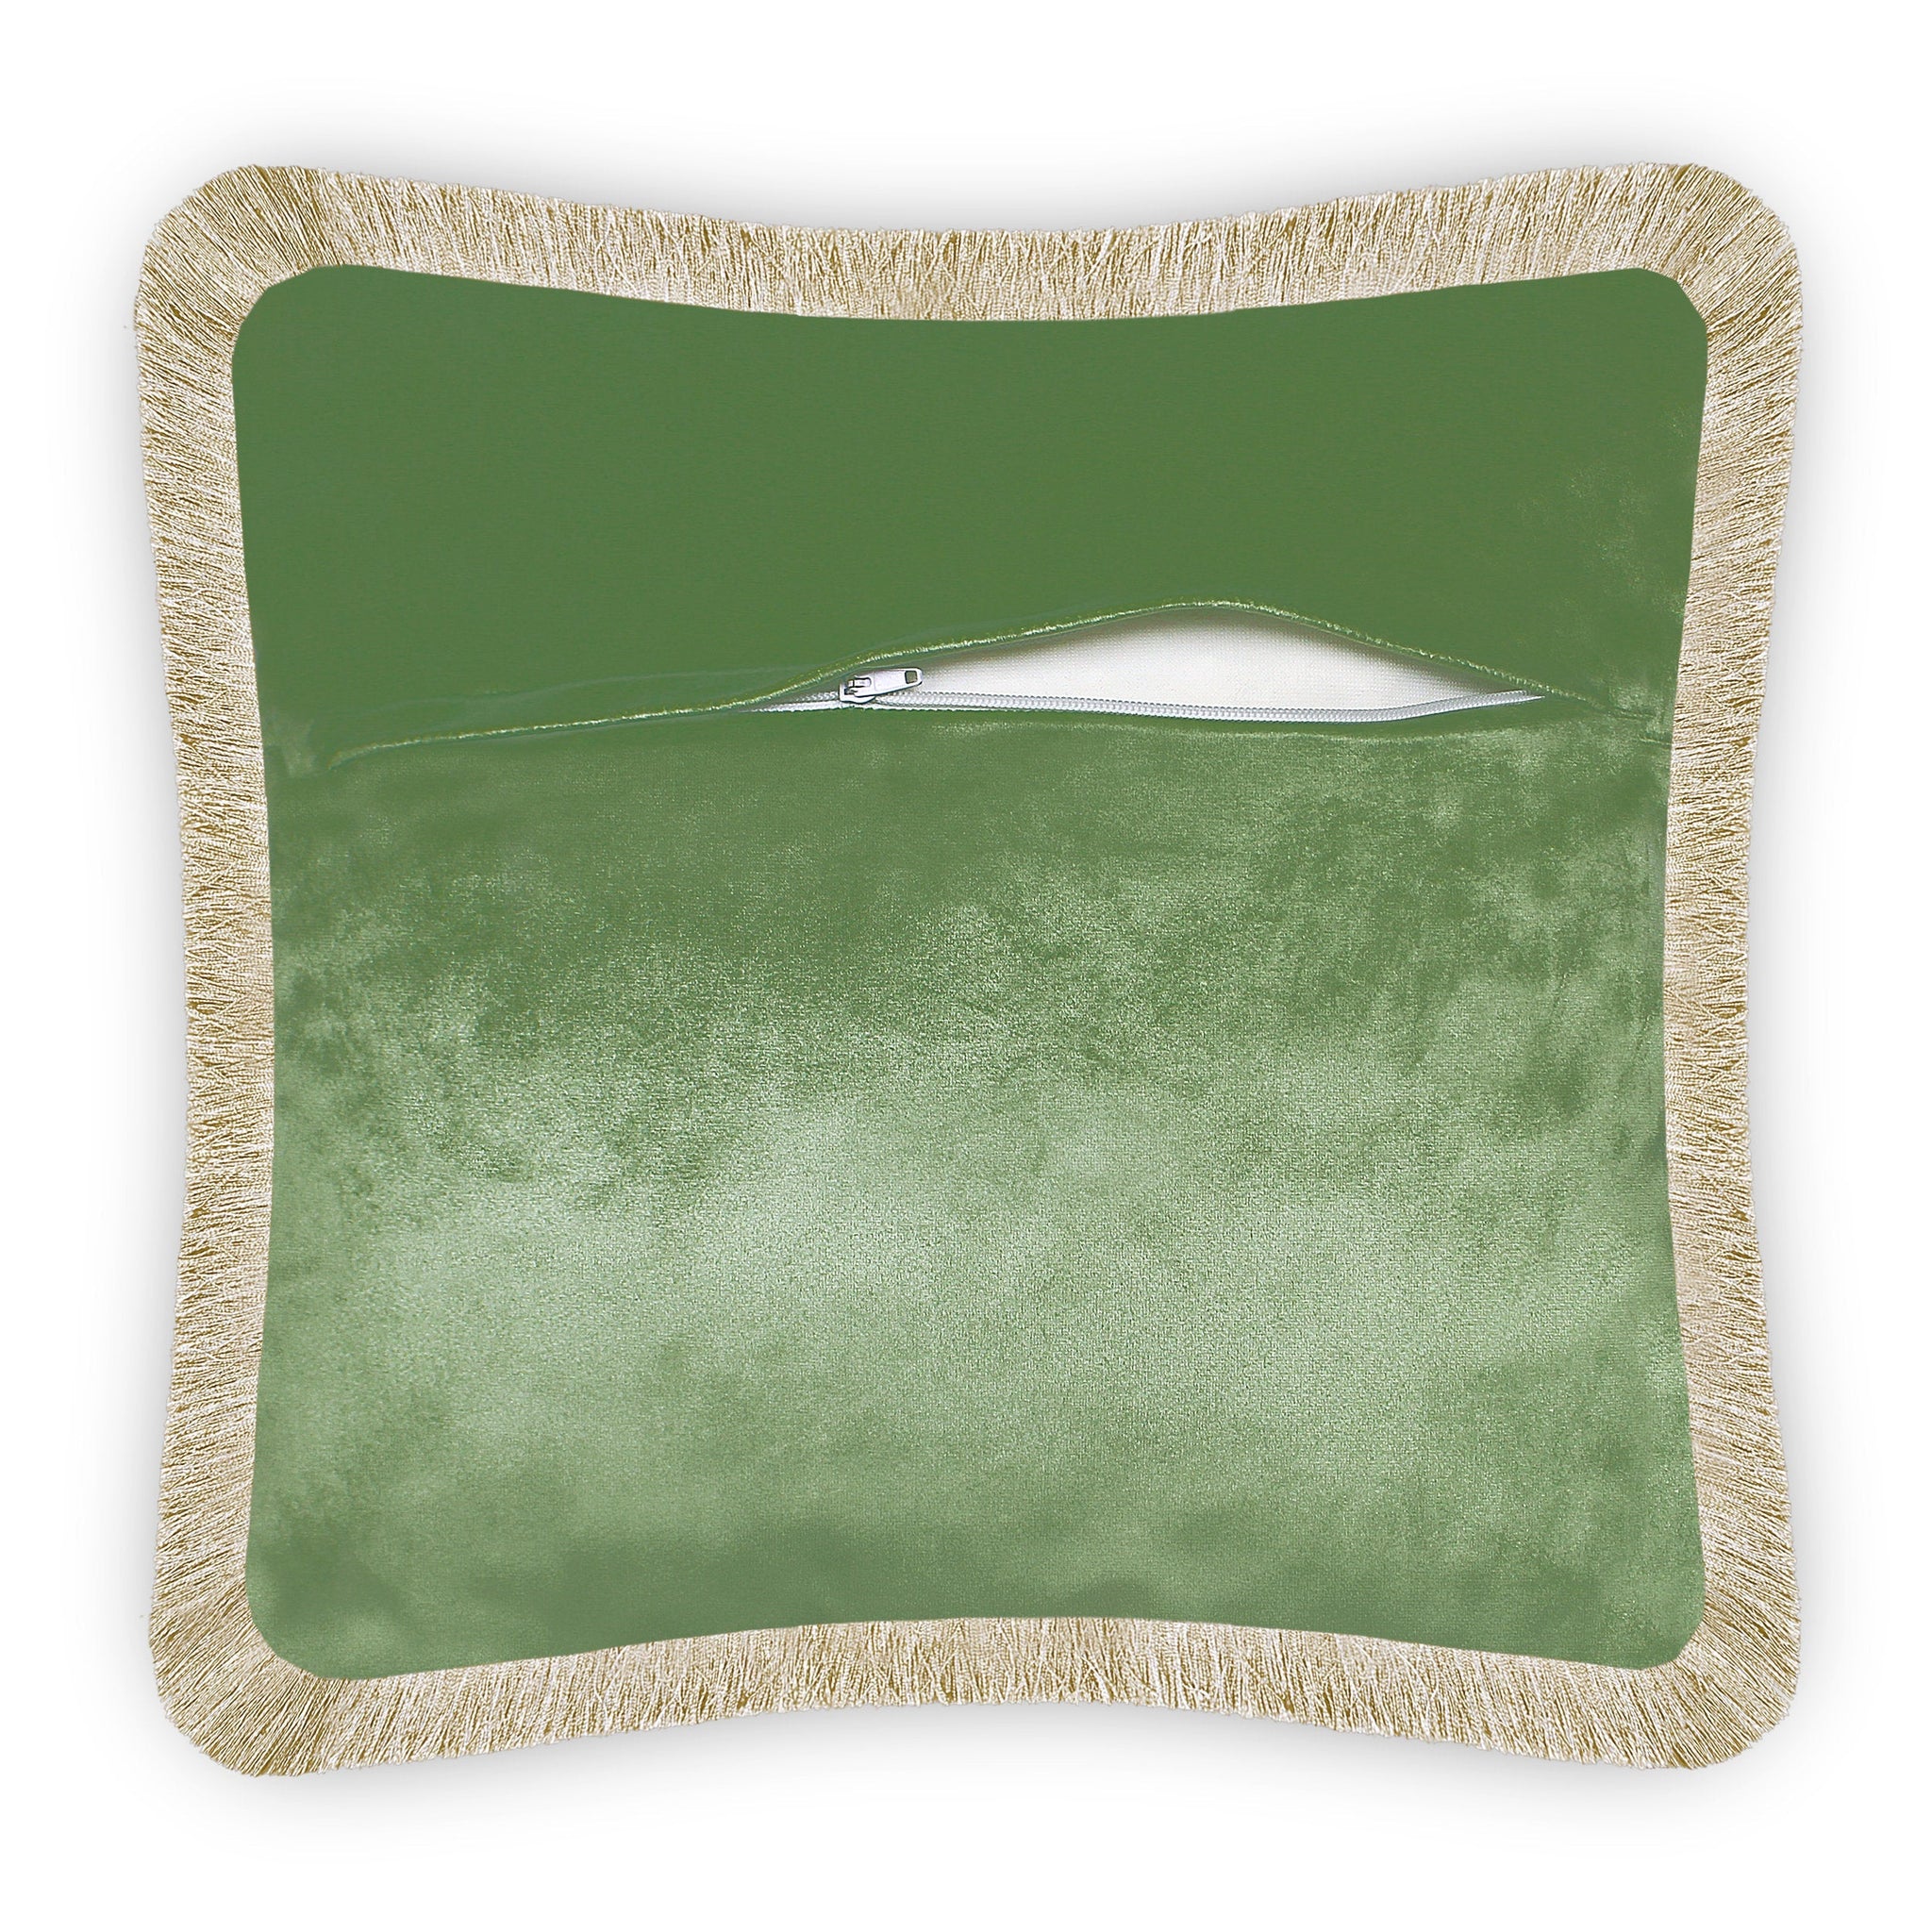 Vellato Velvet Cushion Cover, Ottoman Floral Decorative Pillowcase, Vintage Home Decor Wysada, 45x45 cm.